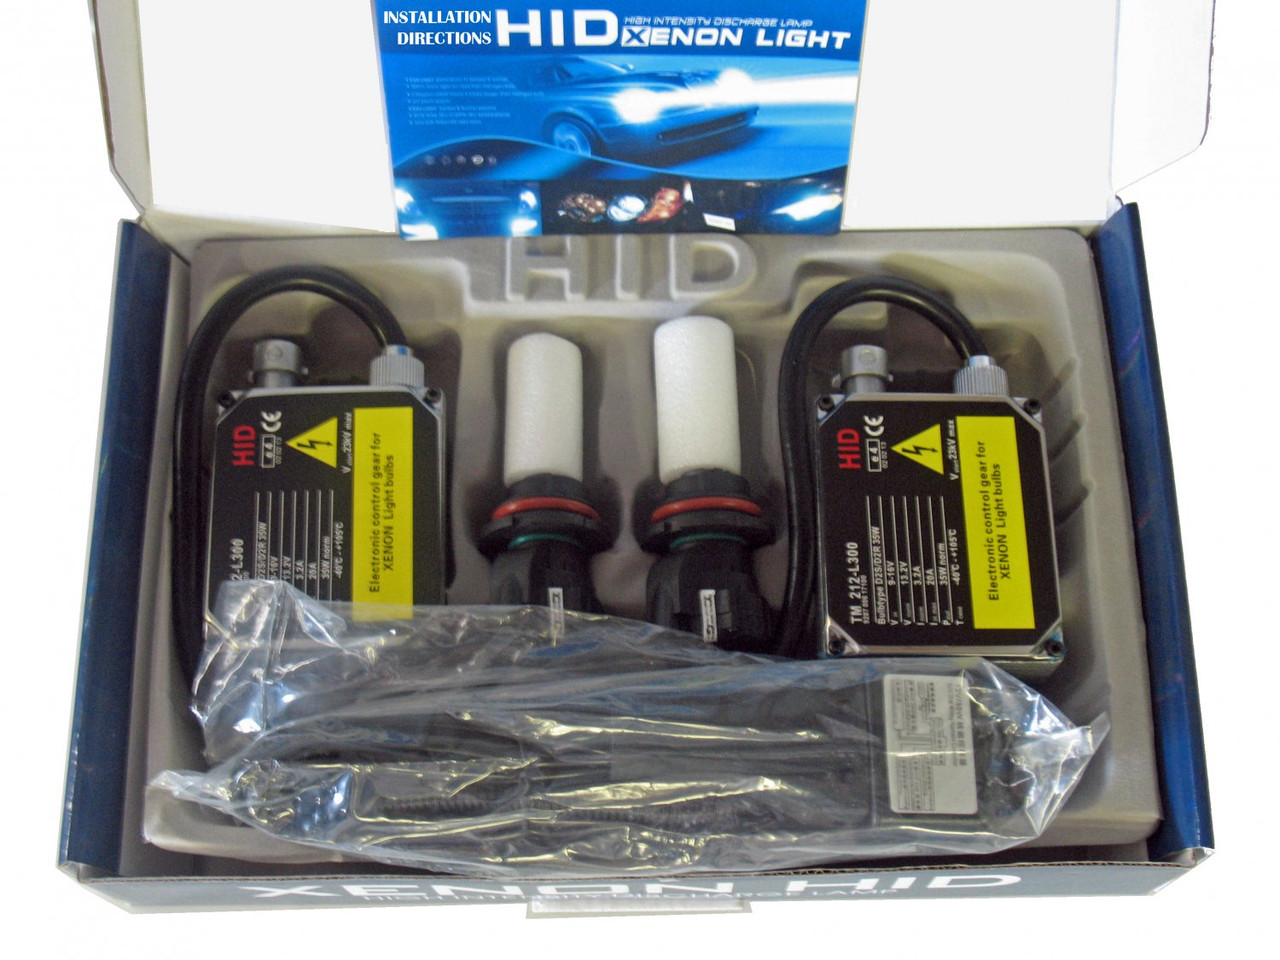 BlingLights Brand Xenon HID Headlight Upgrade Kit for Harley-Davidson Road Glide FL